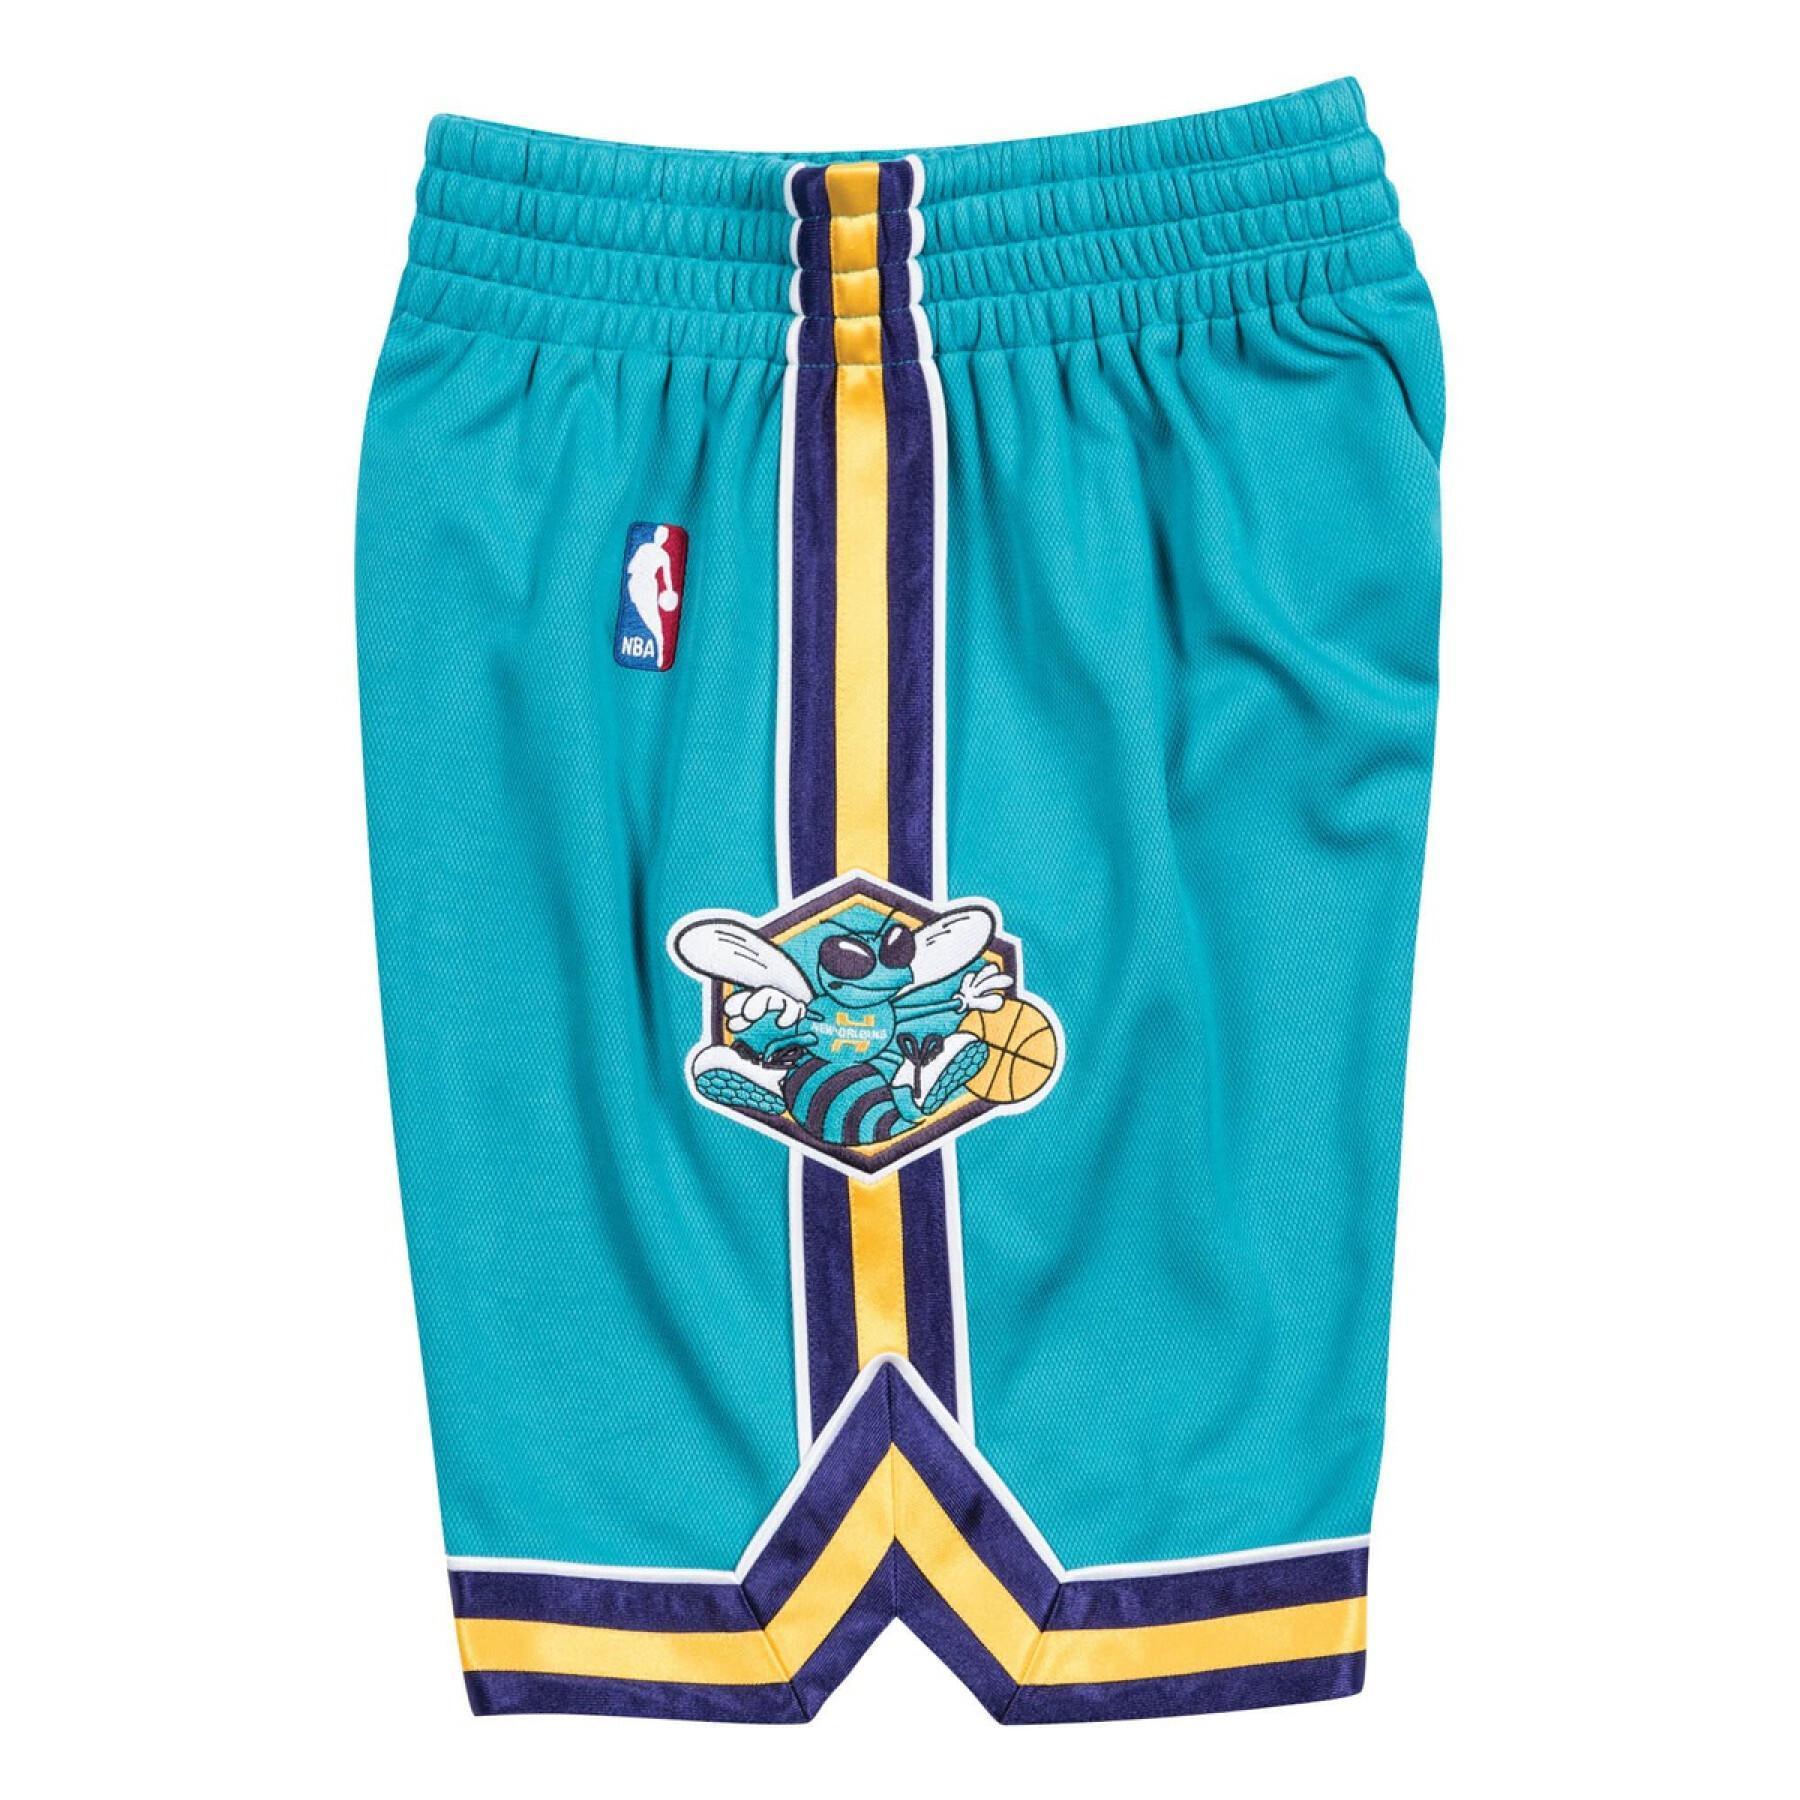 Äkta shorts New Orleans Hornets nba